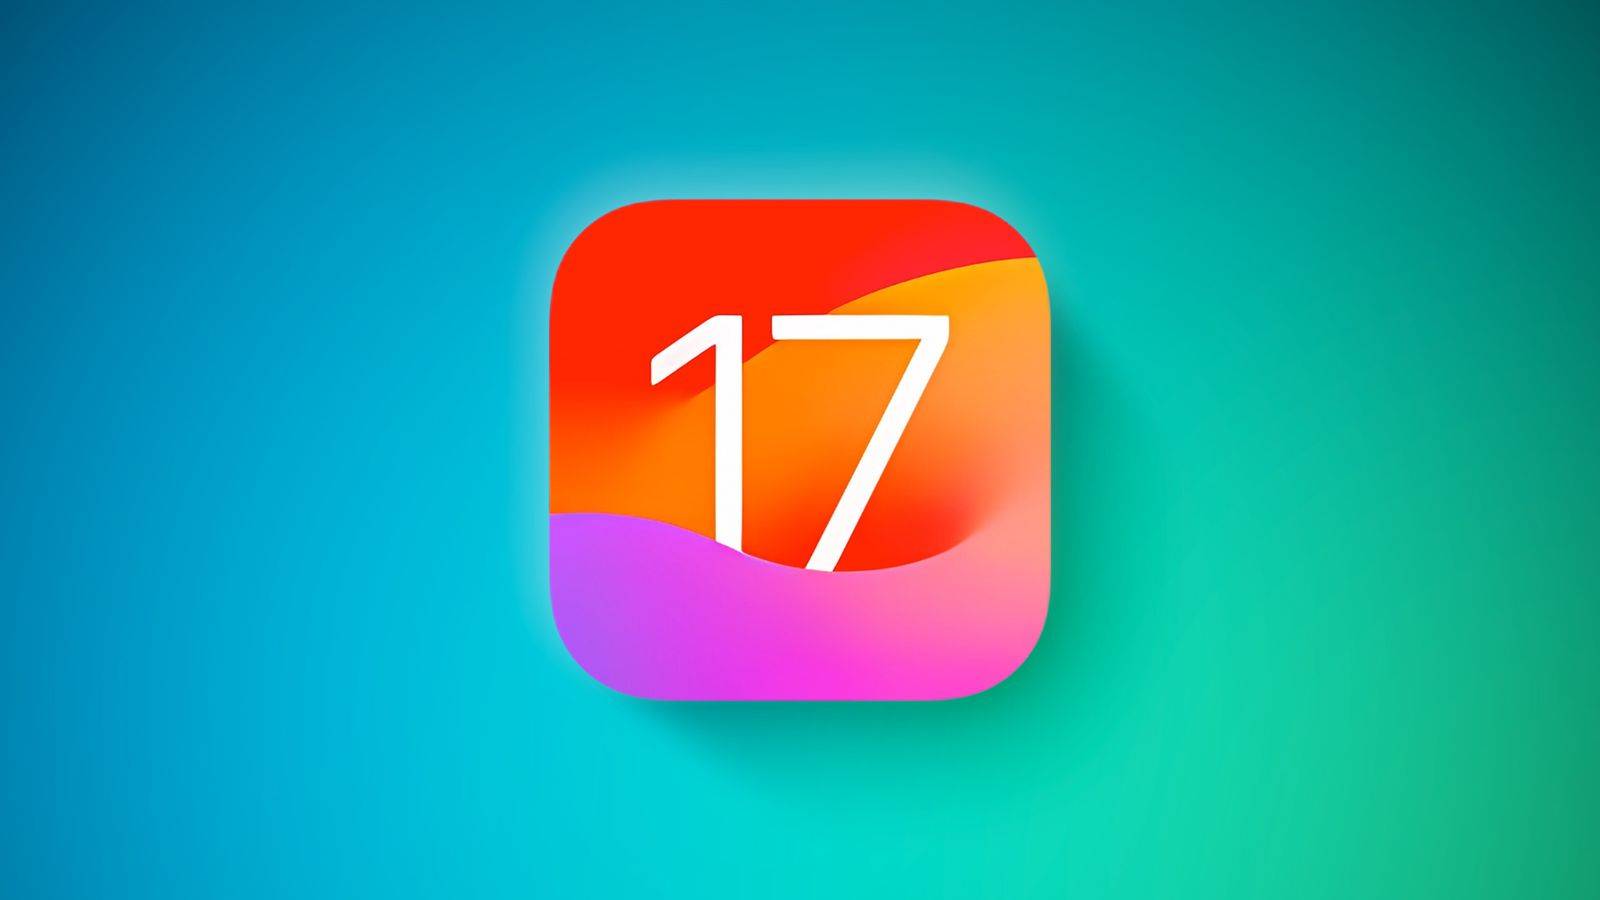 iOS 17.1 sortie le 24 octobre iPhone 12 rayonnement France